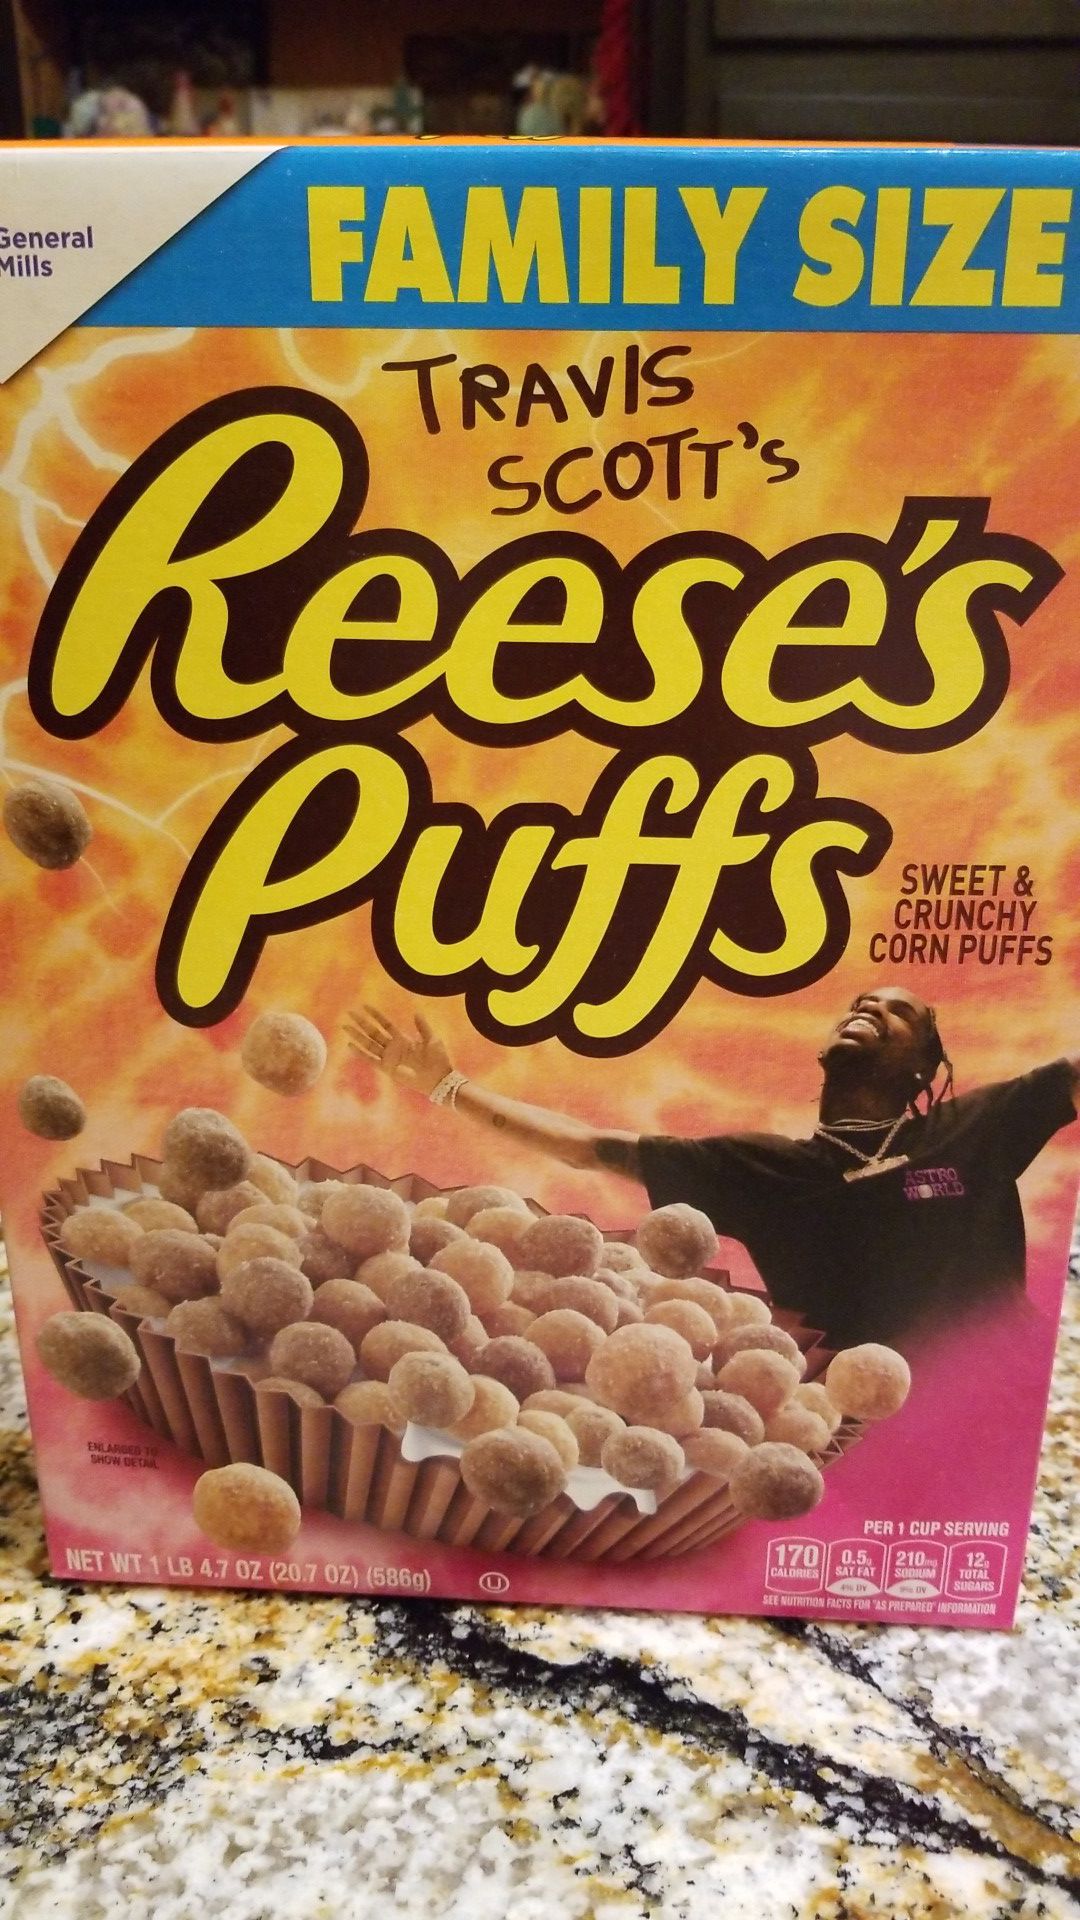 Travis scott cereal